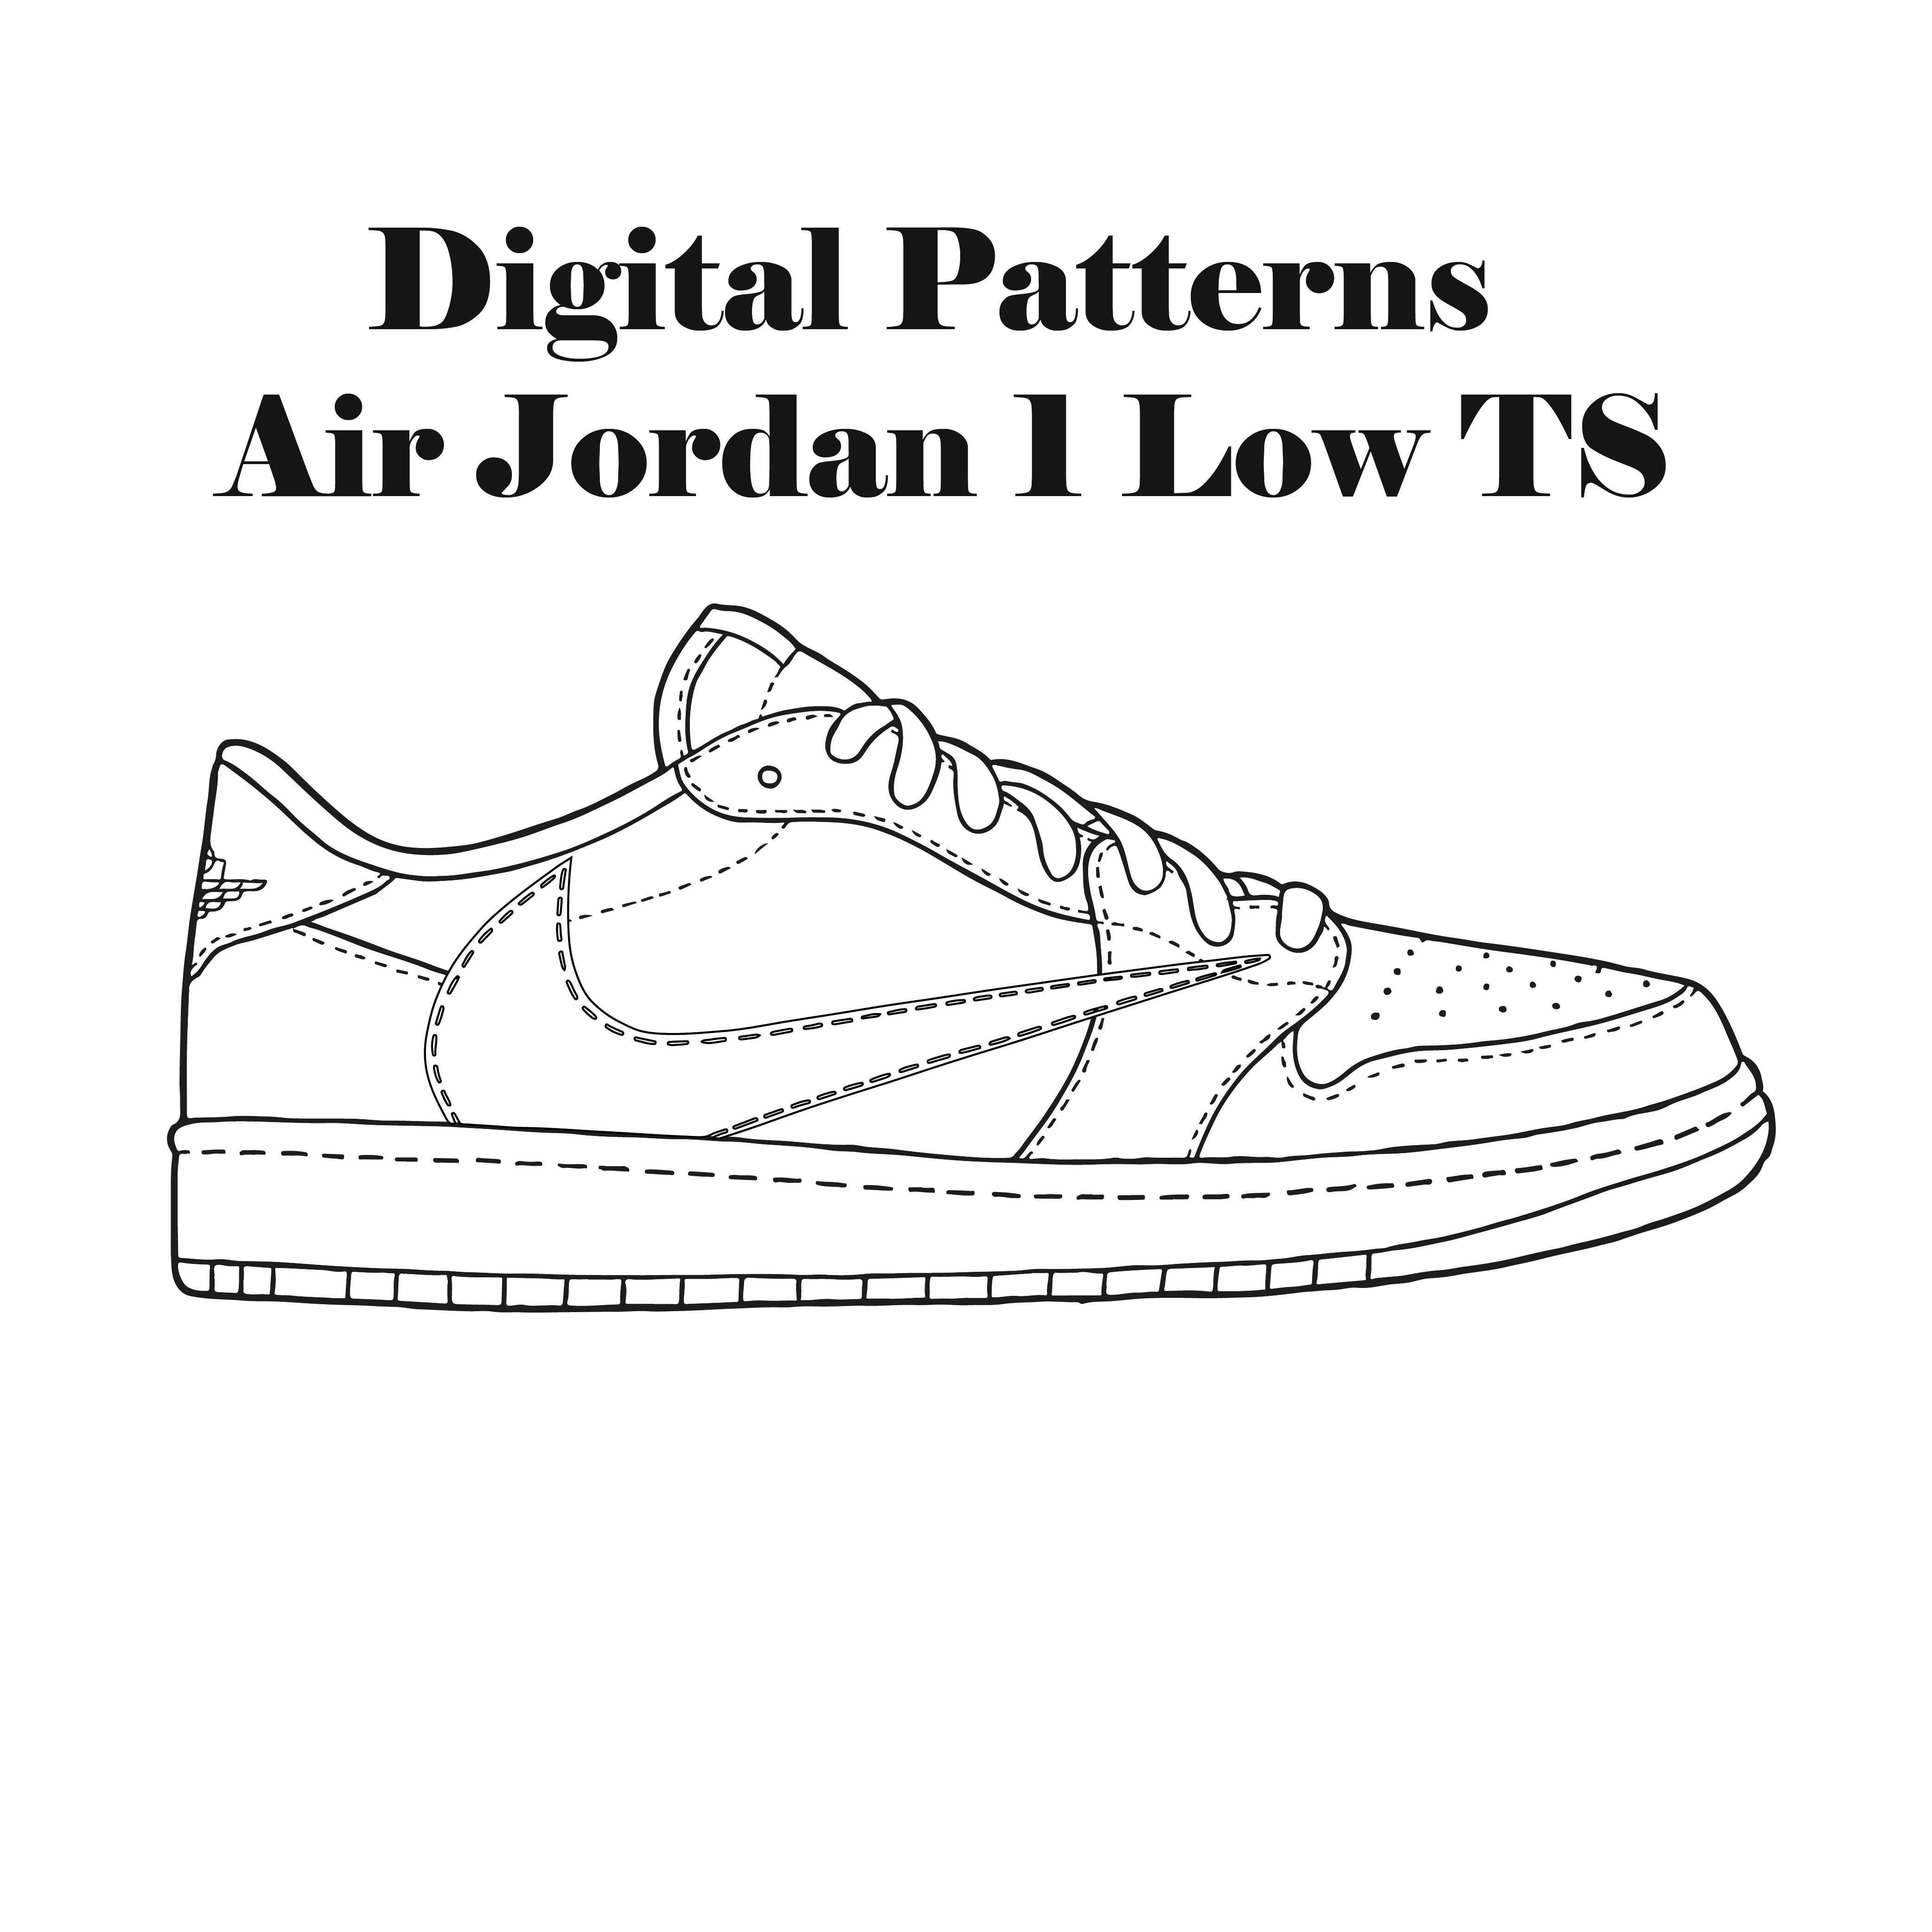 Air Jordan 1 Low Travis Scott Digital Patterns – BespokePatternsCie